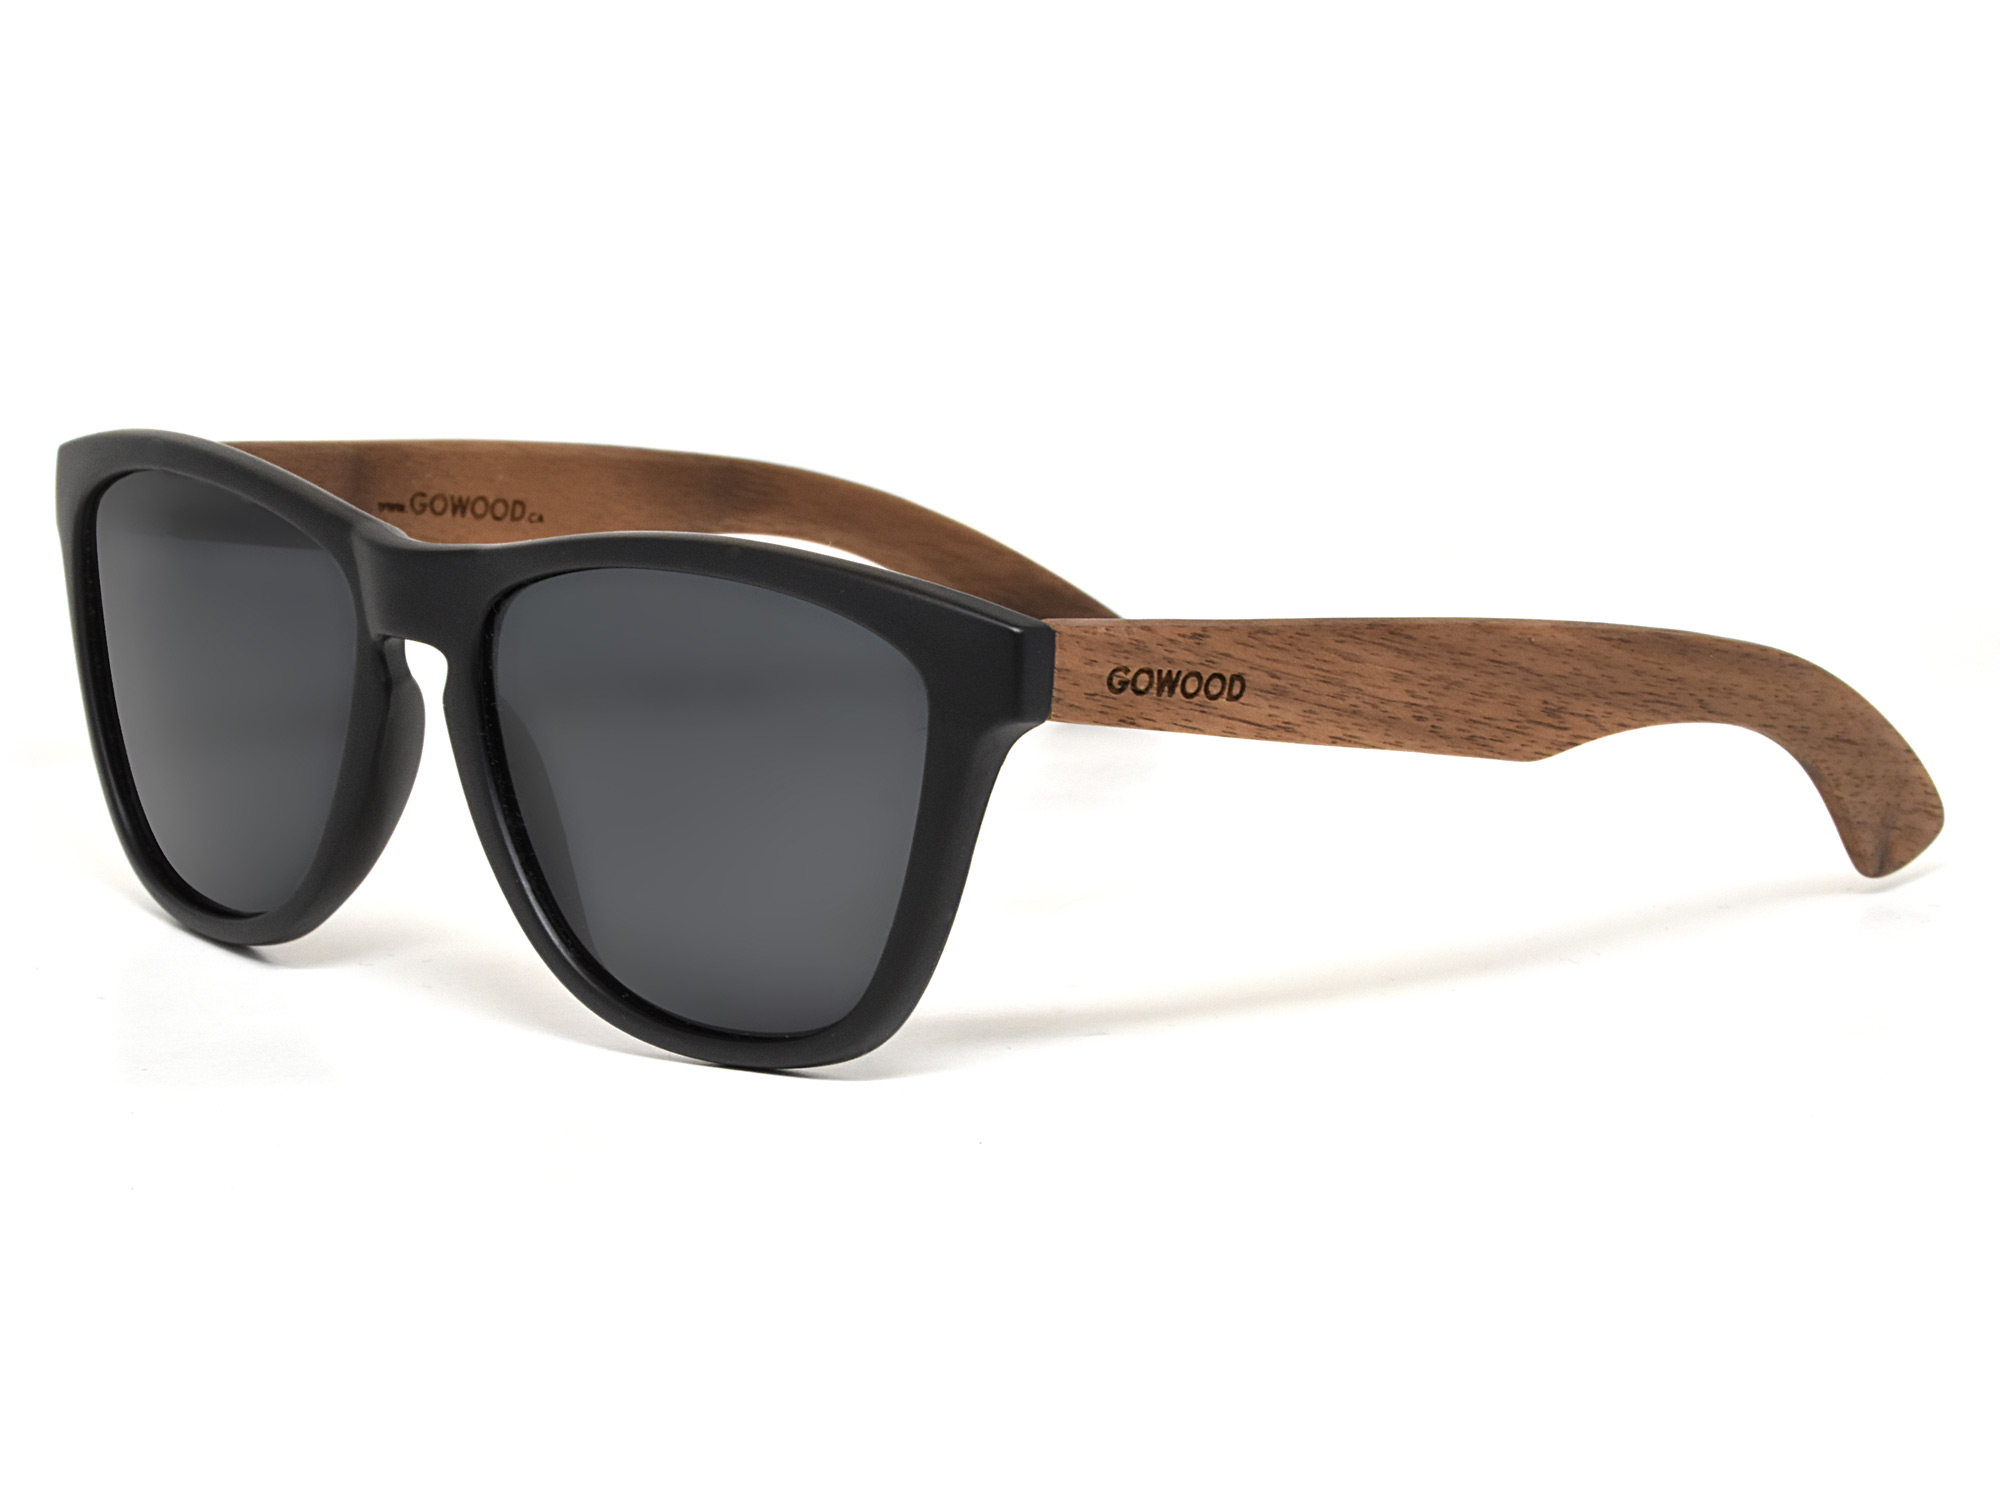 Classic walnut wood sunglasses with black polarized lenses